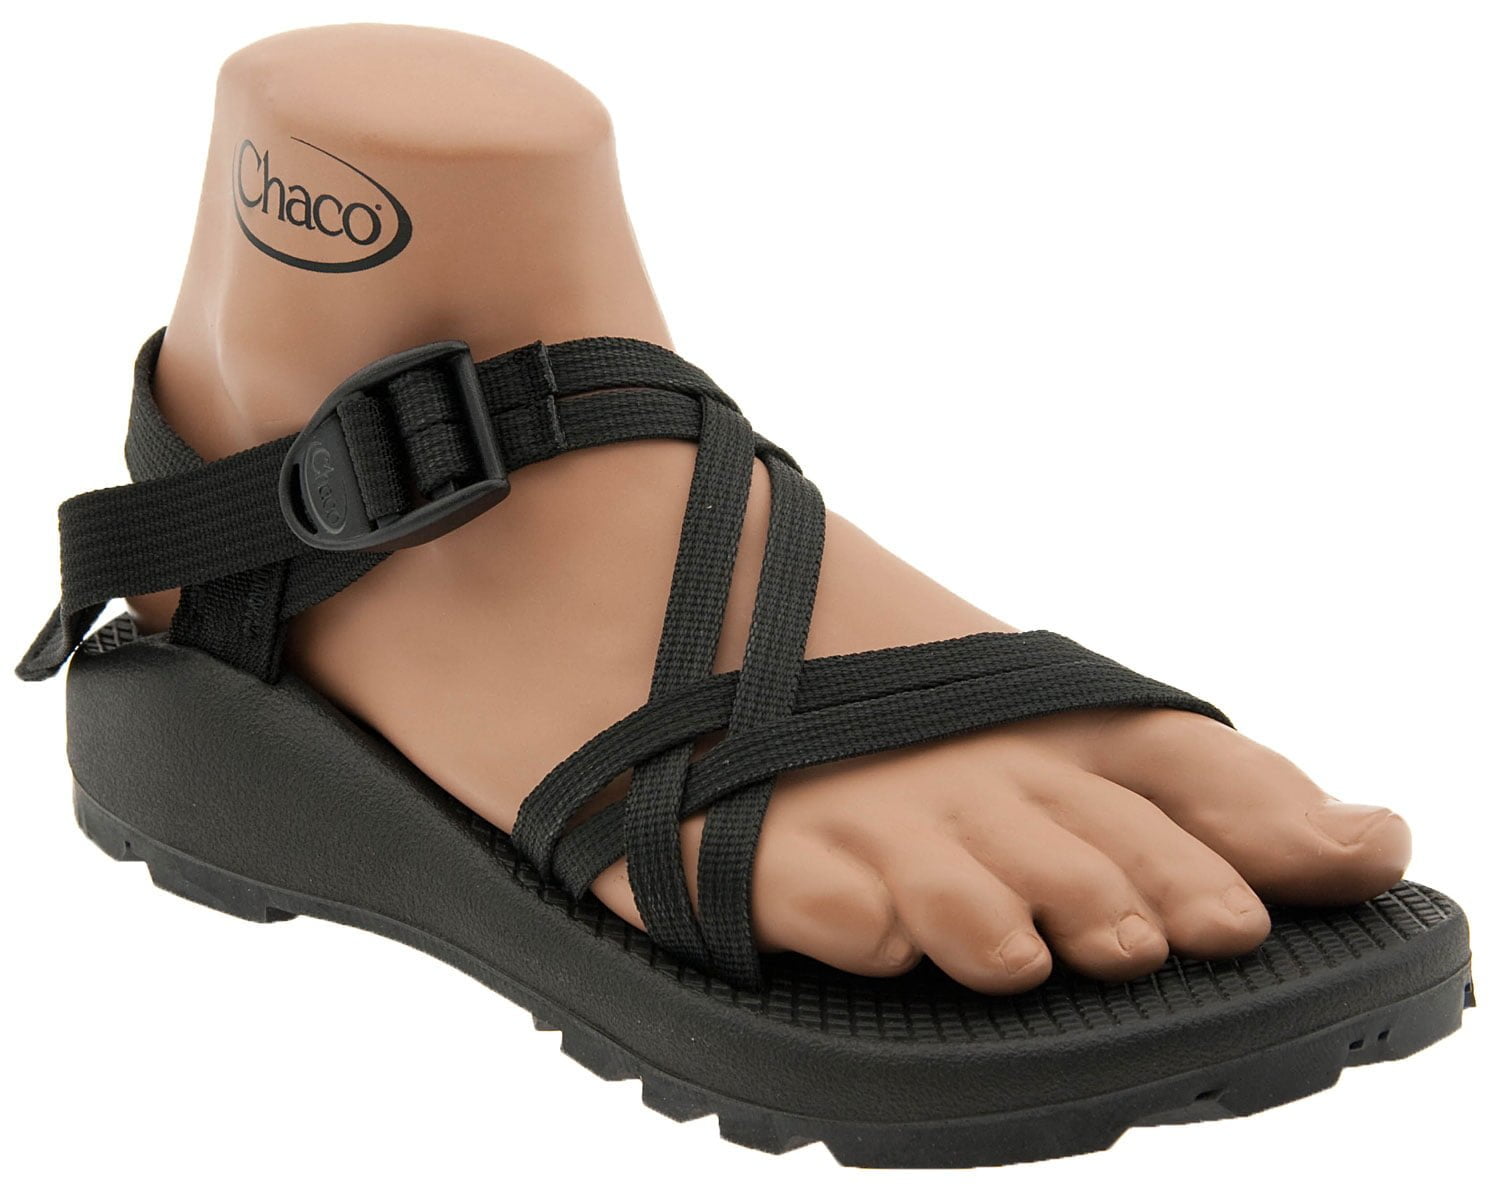 Chaco-summer-sandal-夏天-涼鞋-vedfolnir